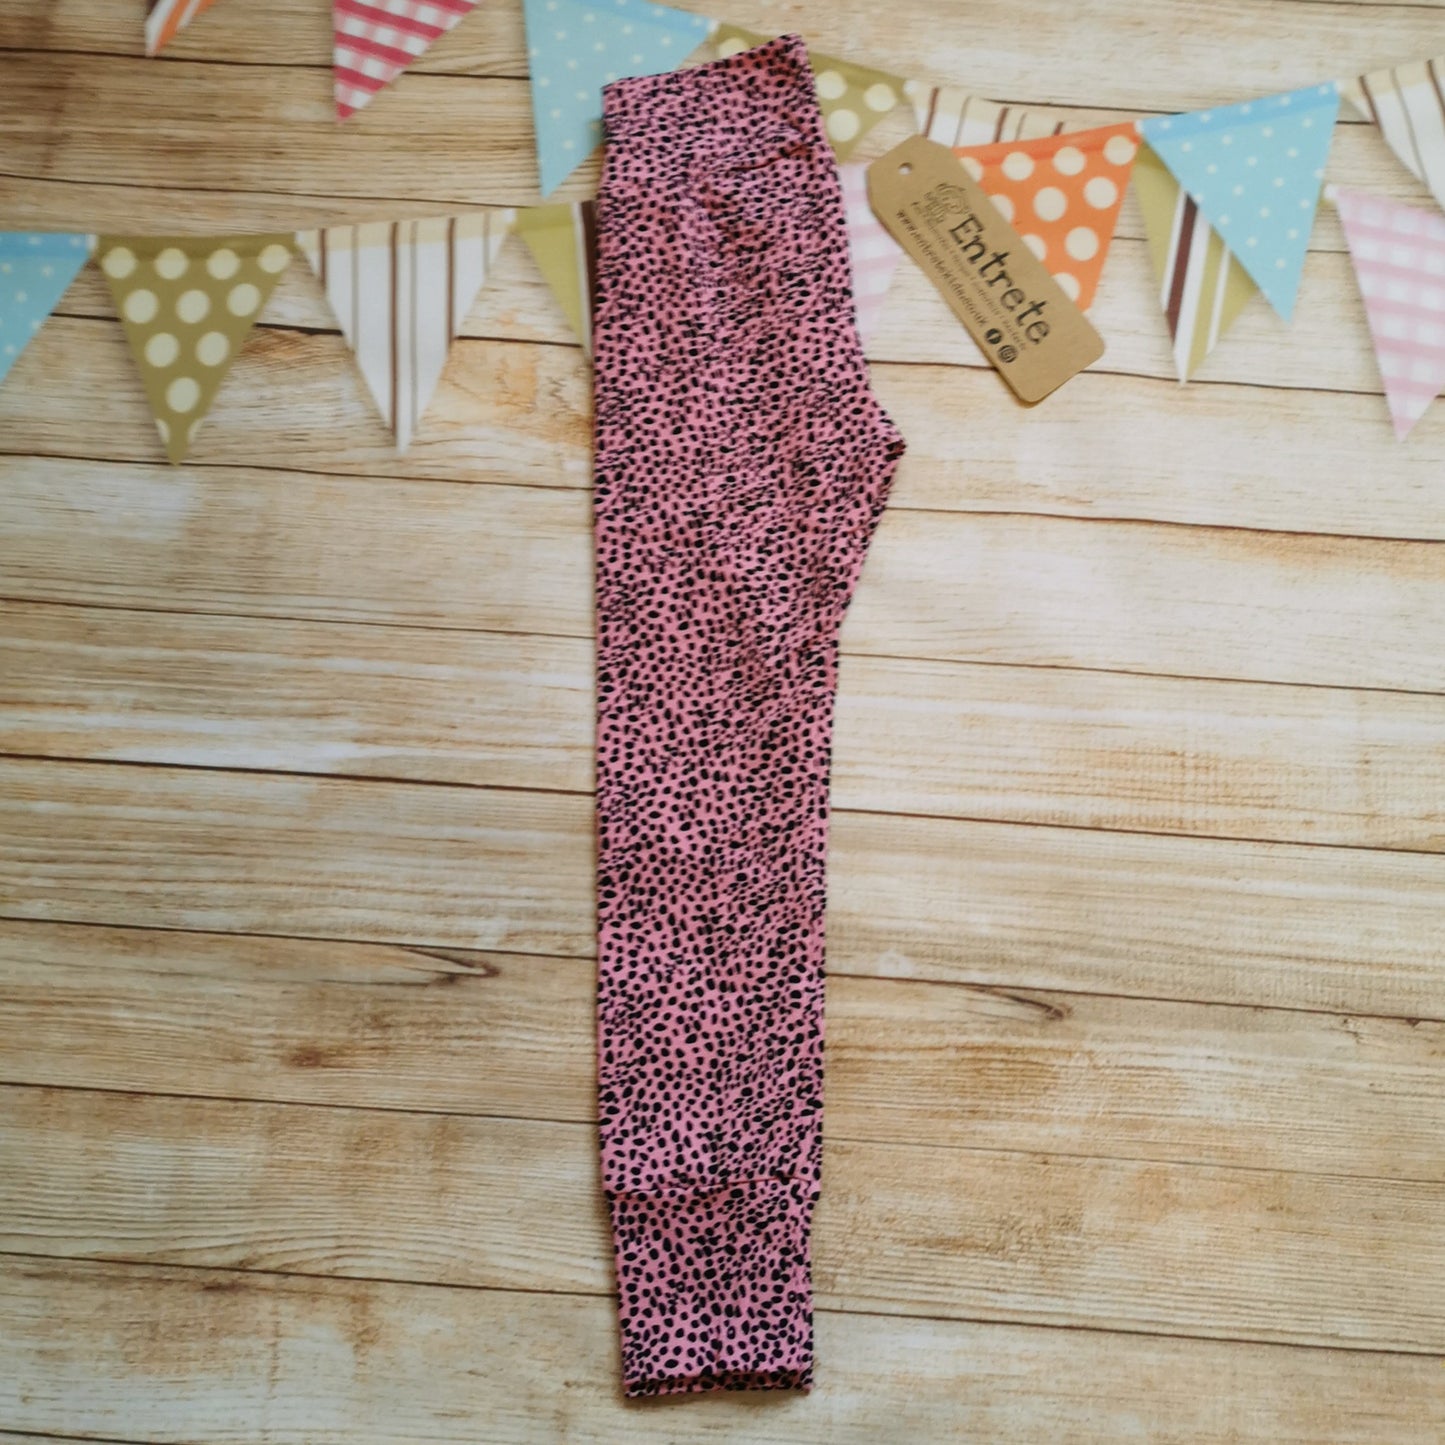 Child & Babies Leggings, handmade using sumptuous pink cheetah cotton jersey.